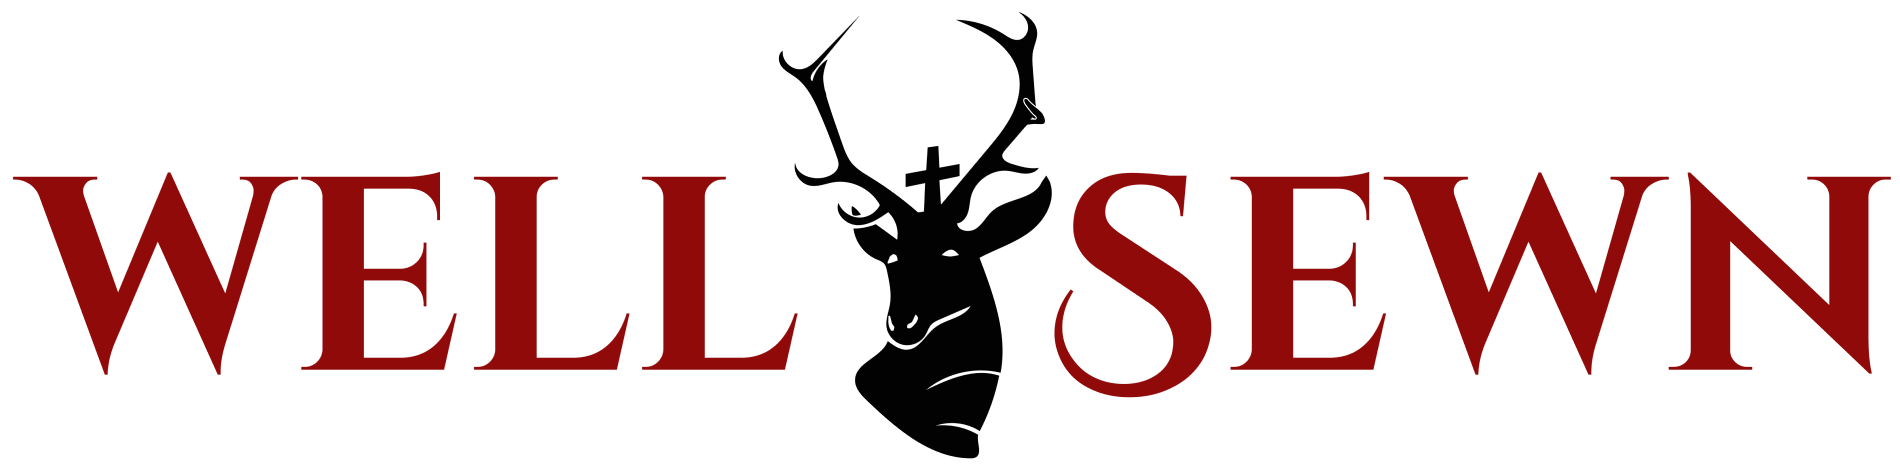 Well Sewn Banner Logo